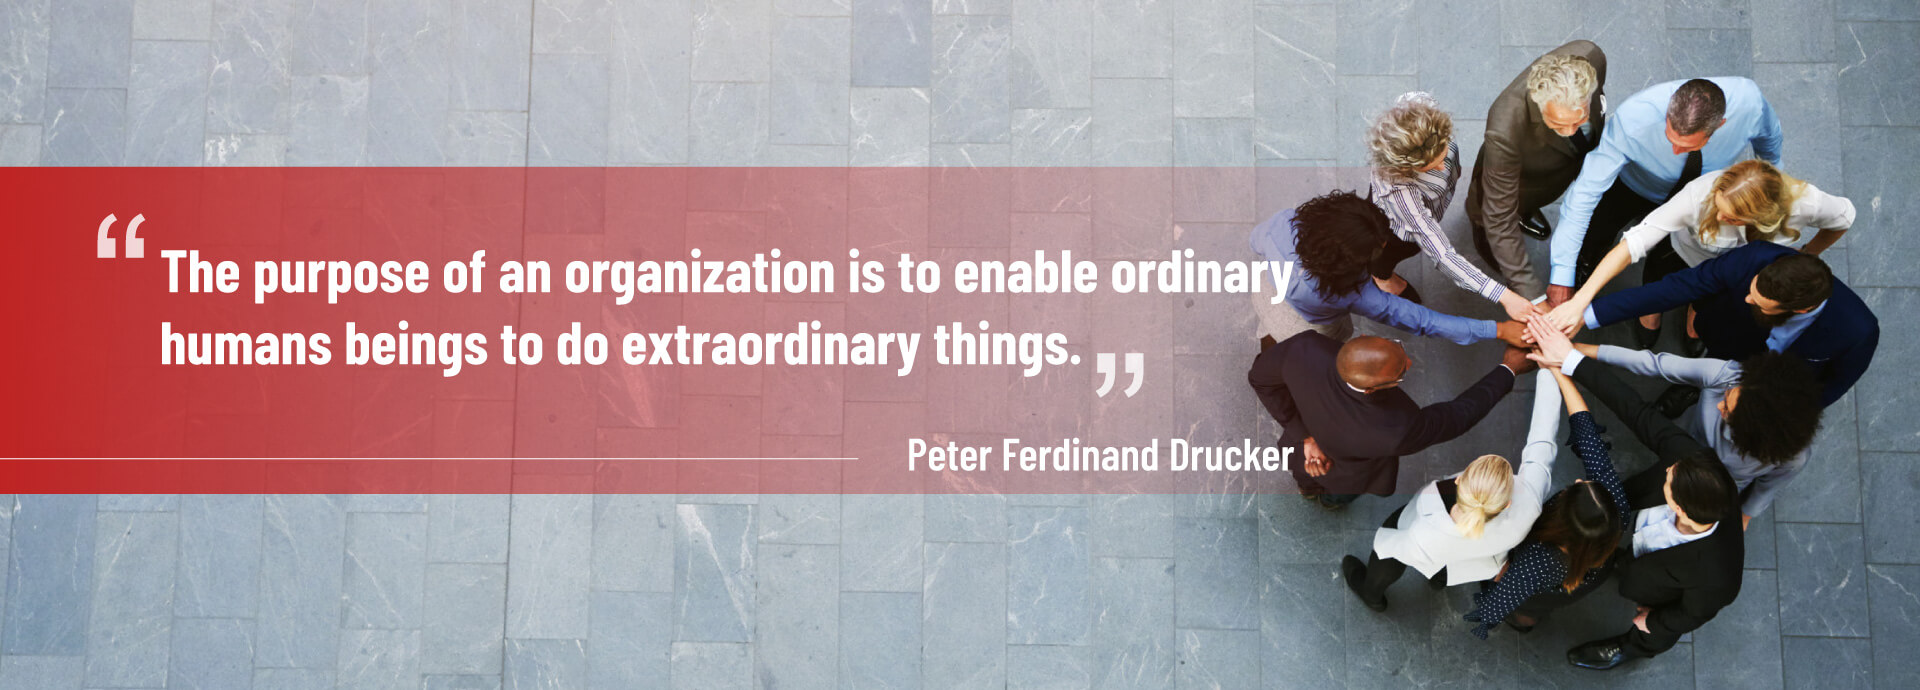 Quotation from Peter Ferdinand Drucker